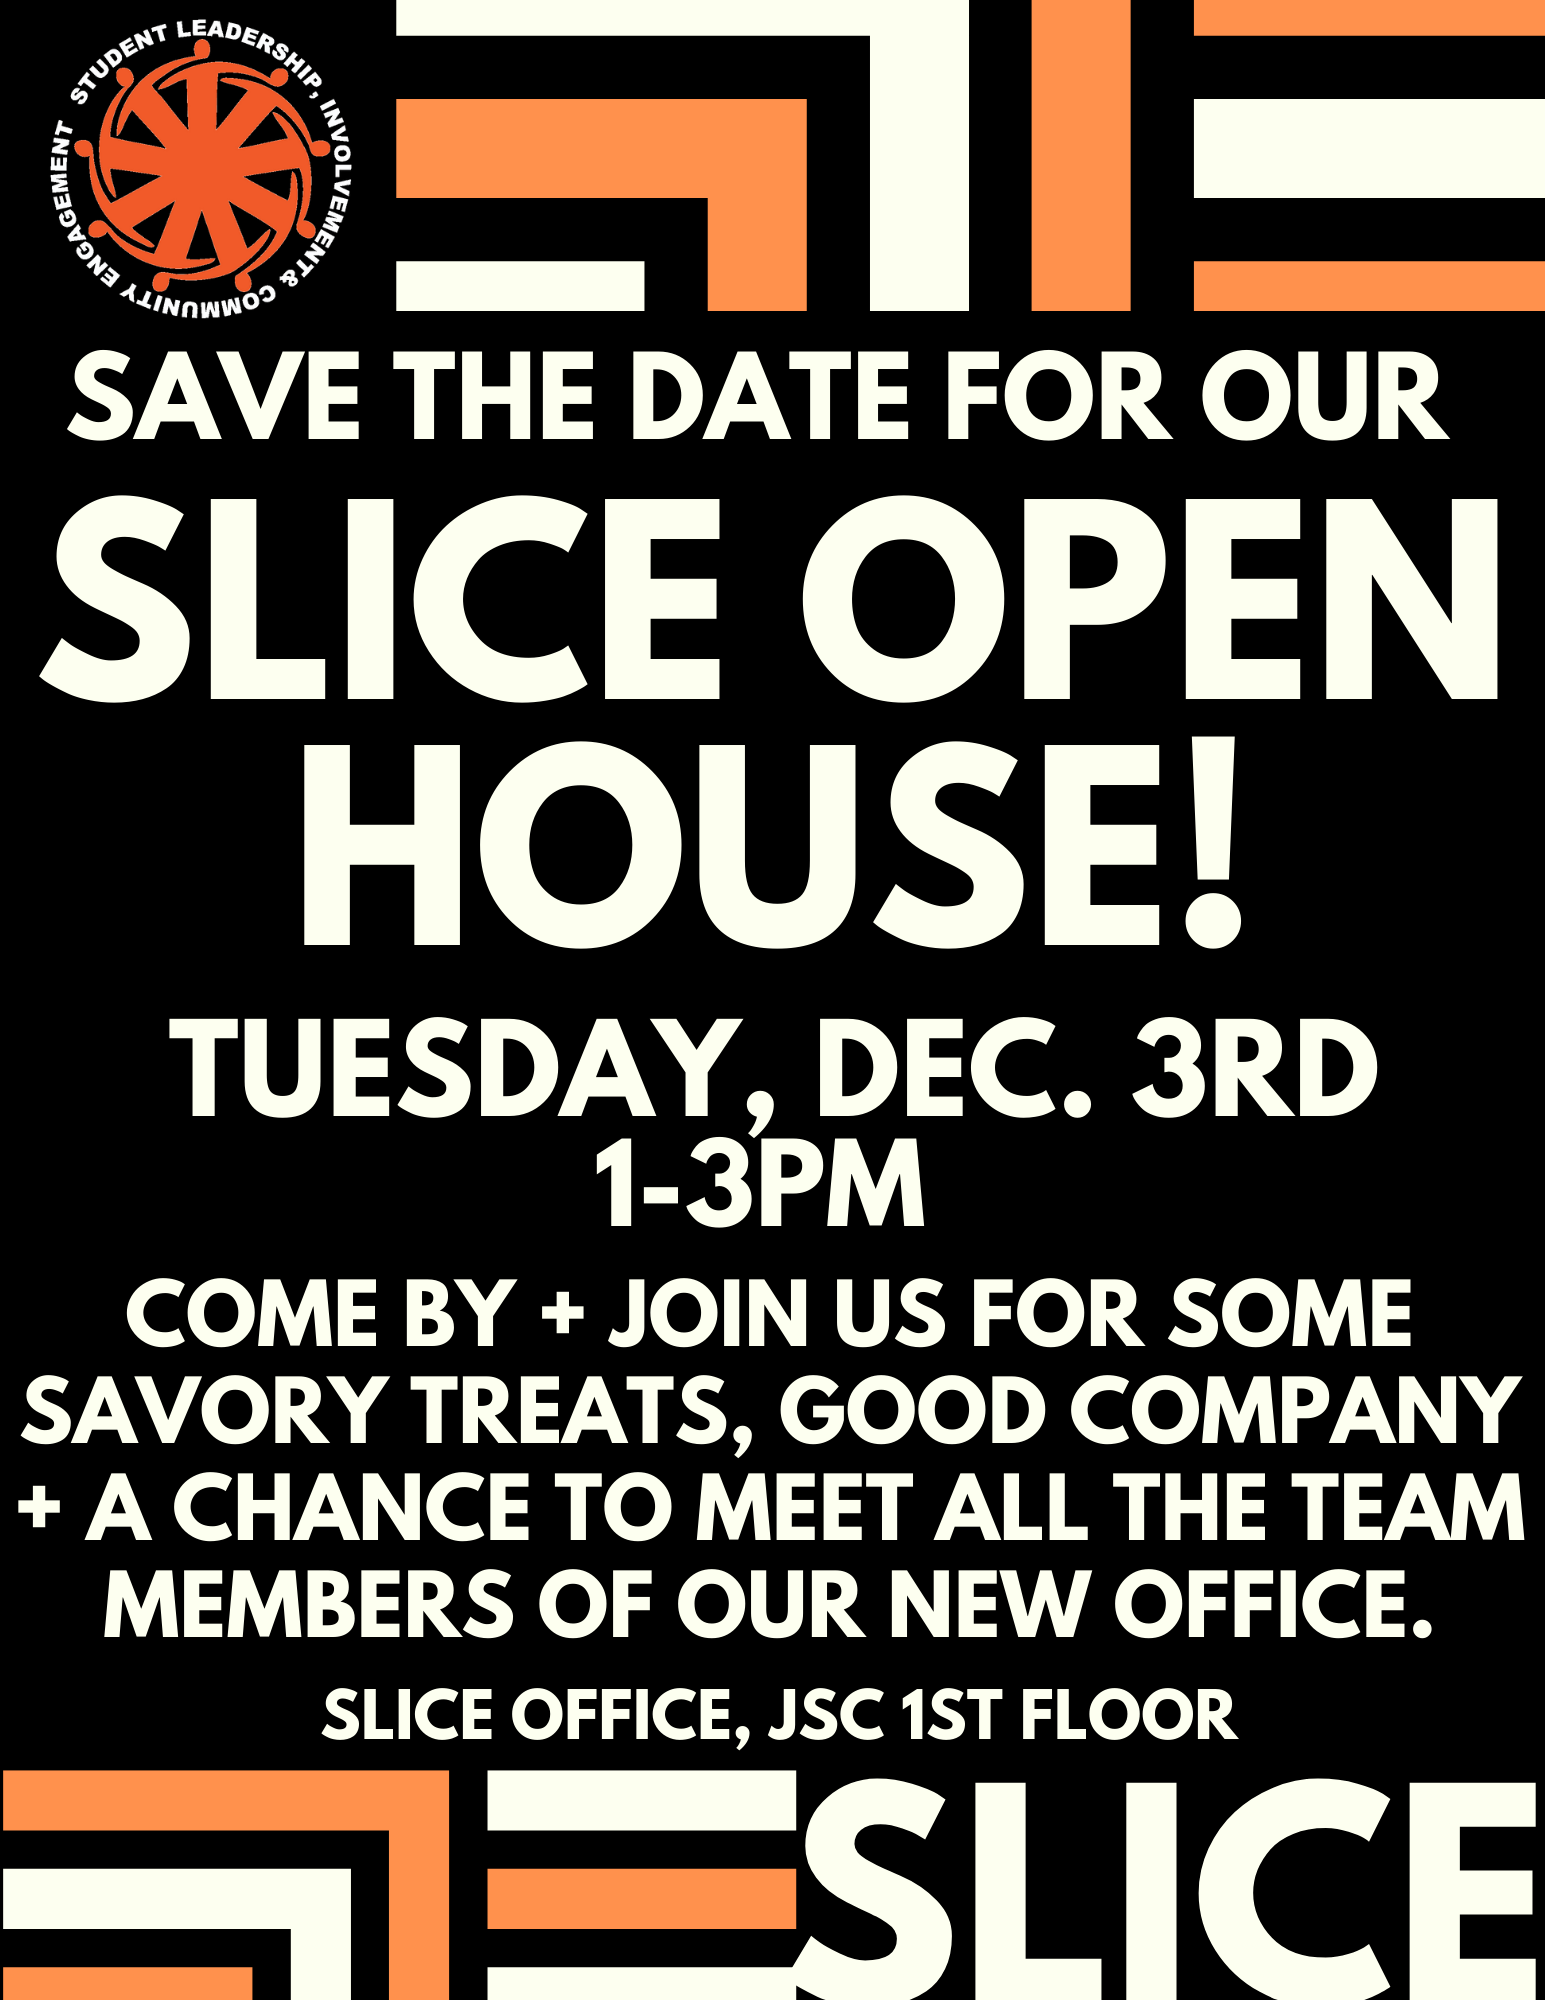 Slice open house